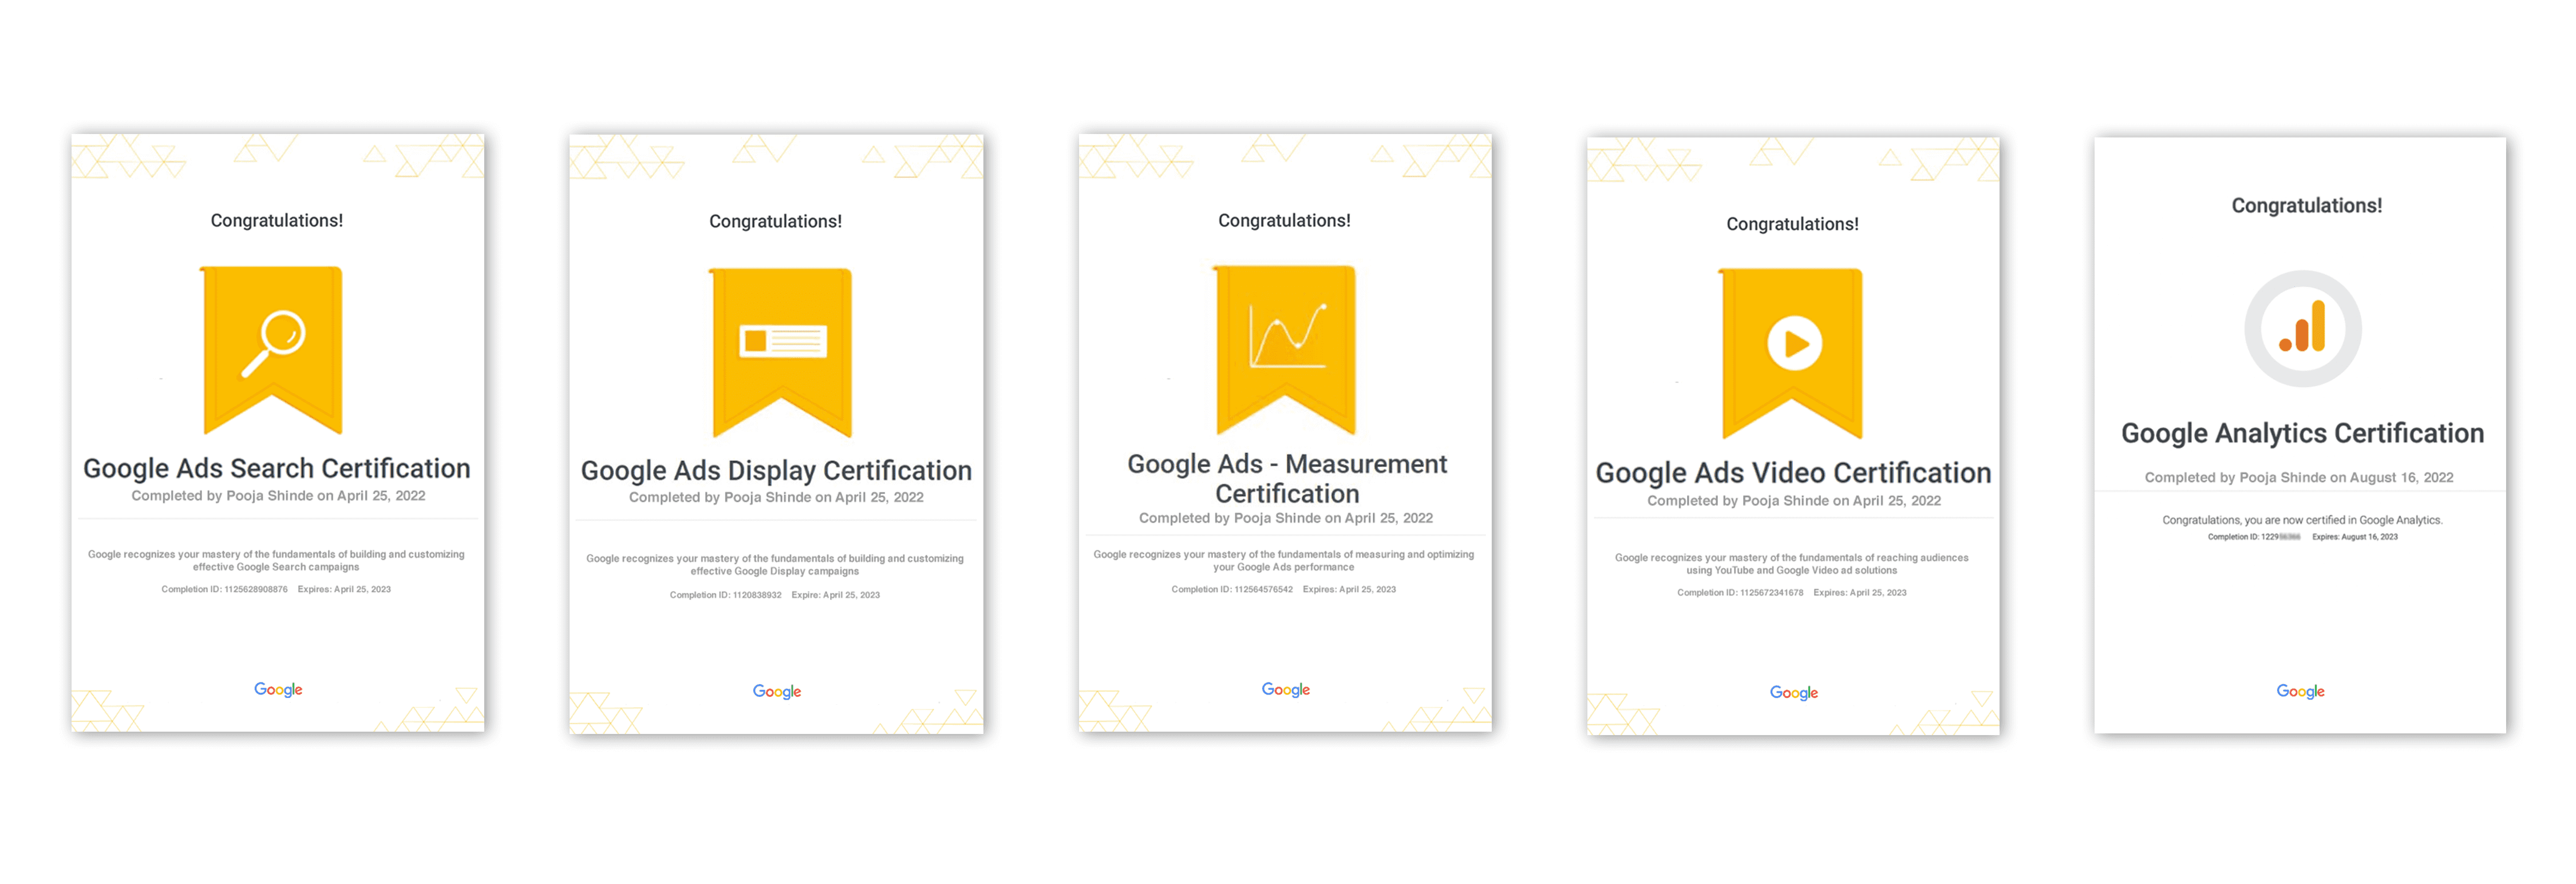 Google Ads & Google Analytics Certificates